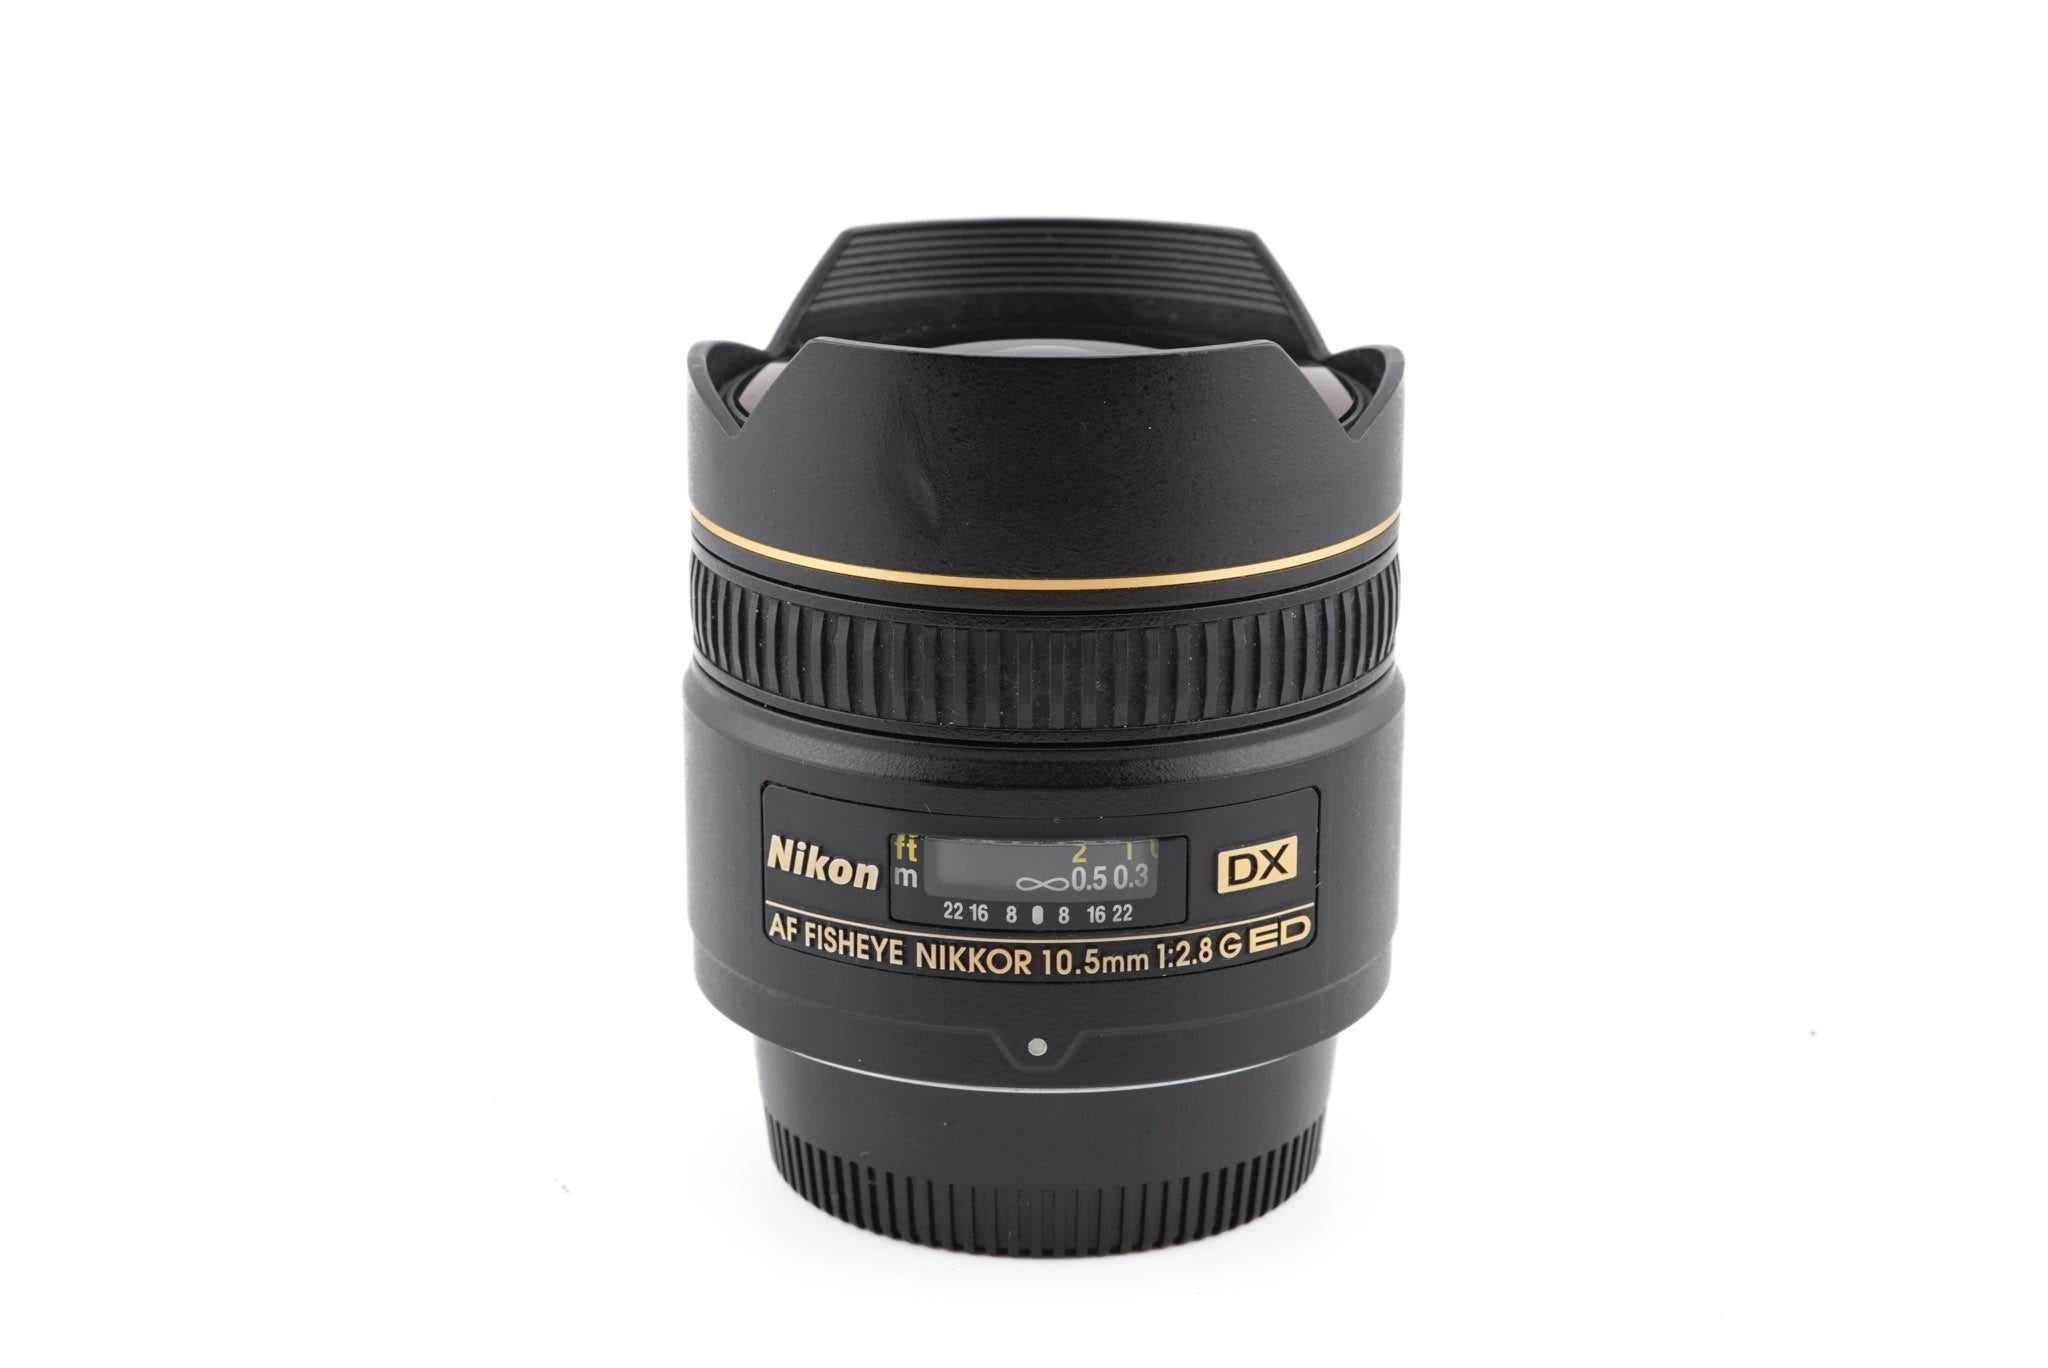 Nikon 10.5mm f2.8 G ED DX Fisheye - Lens